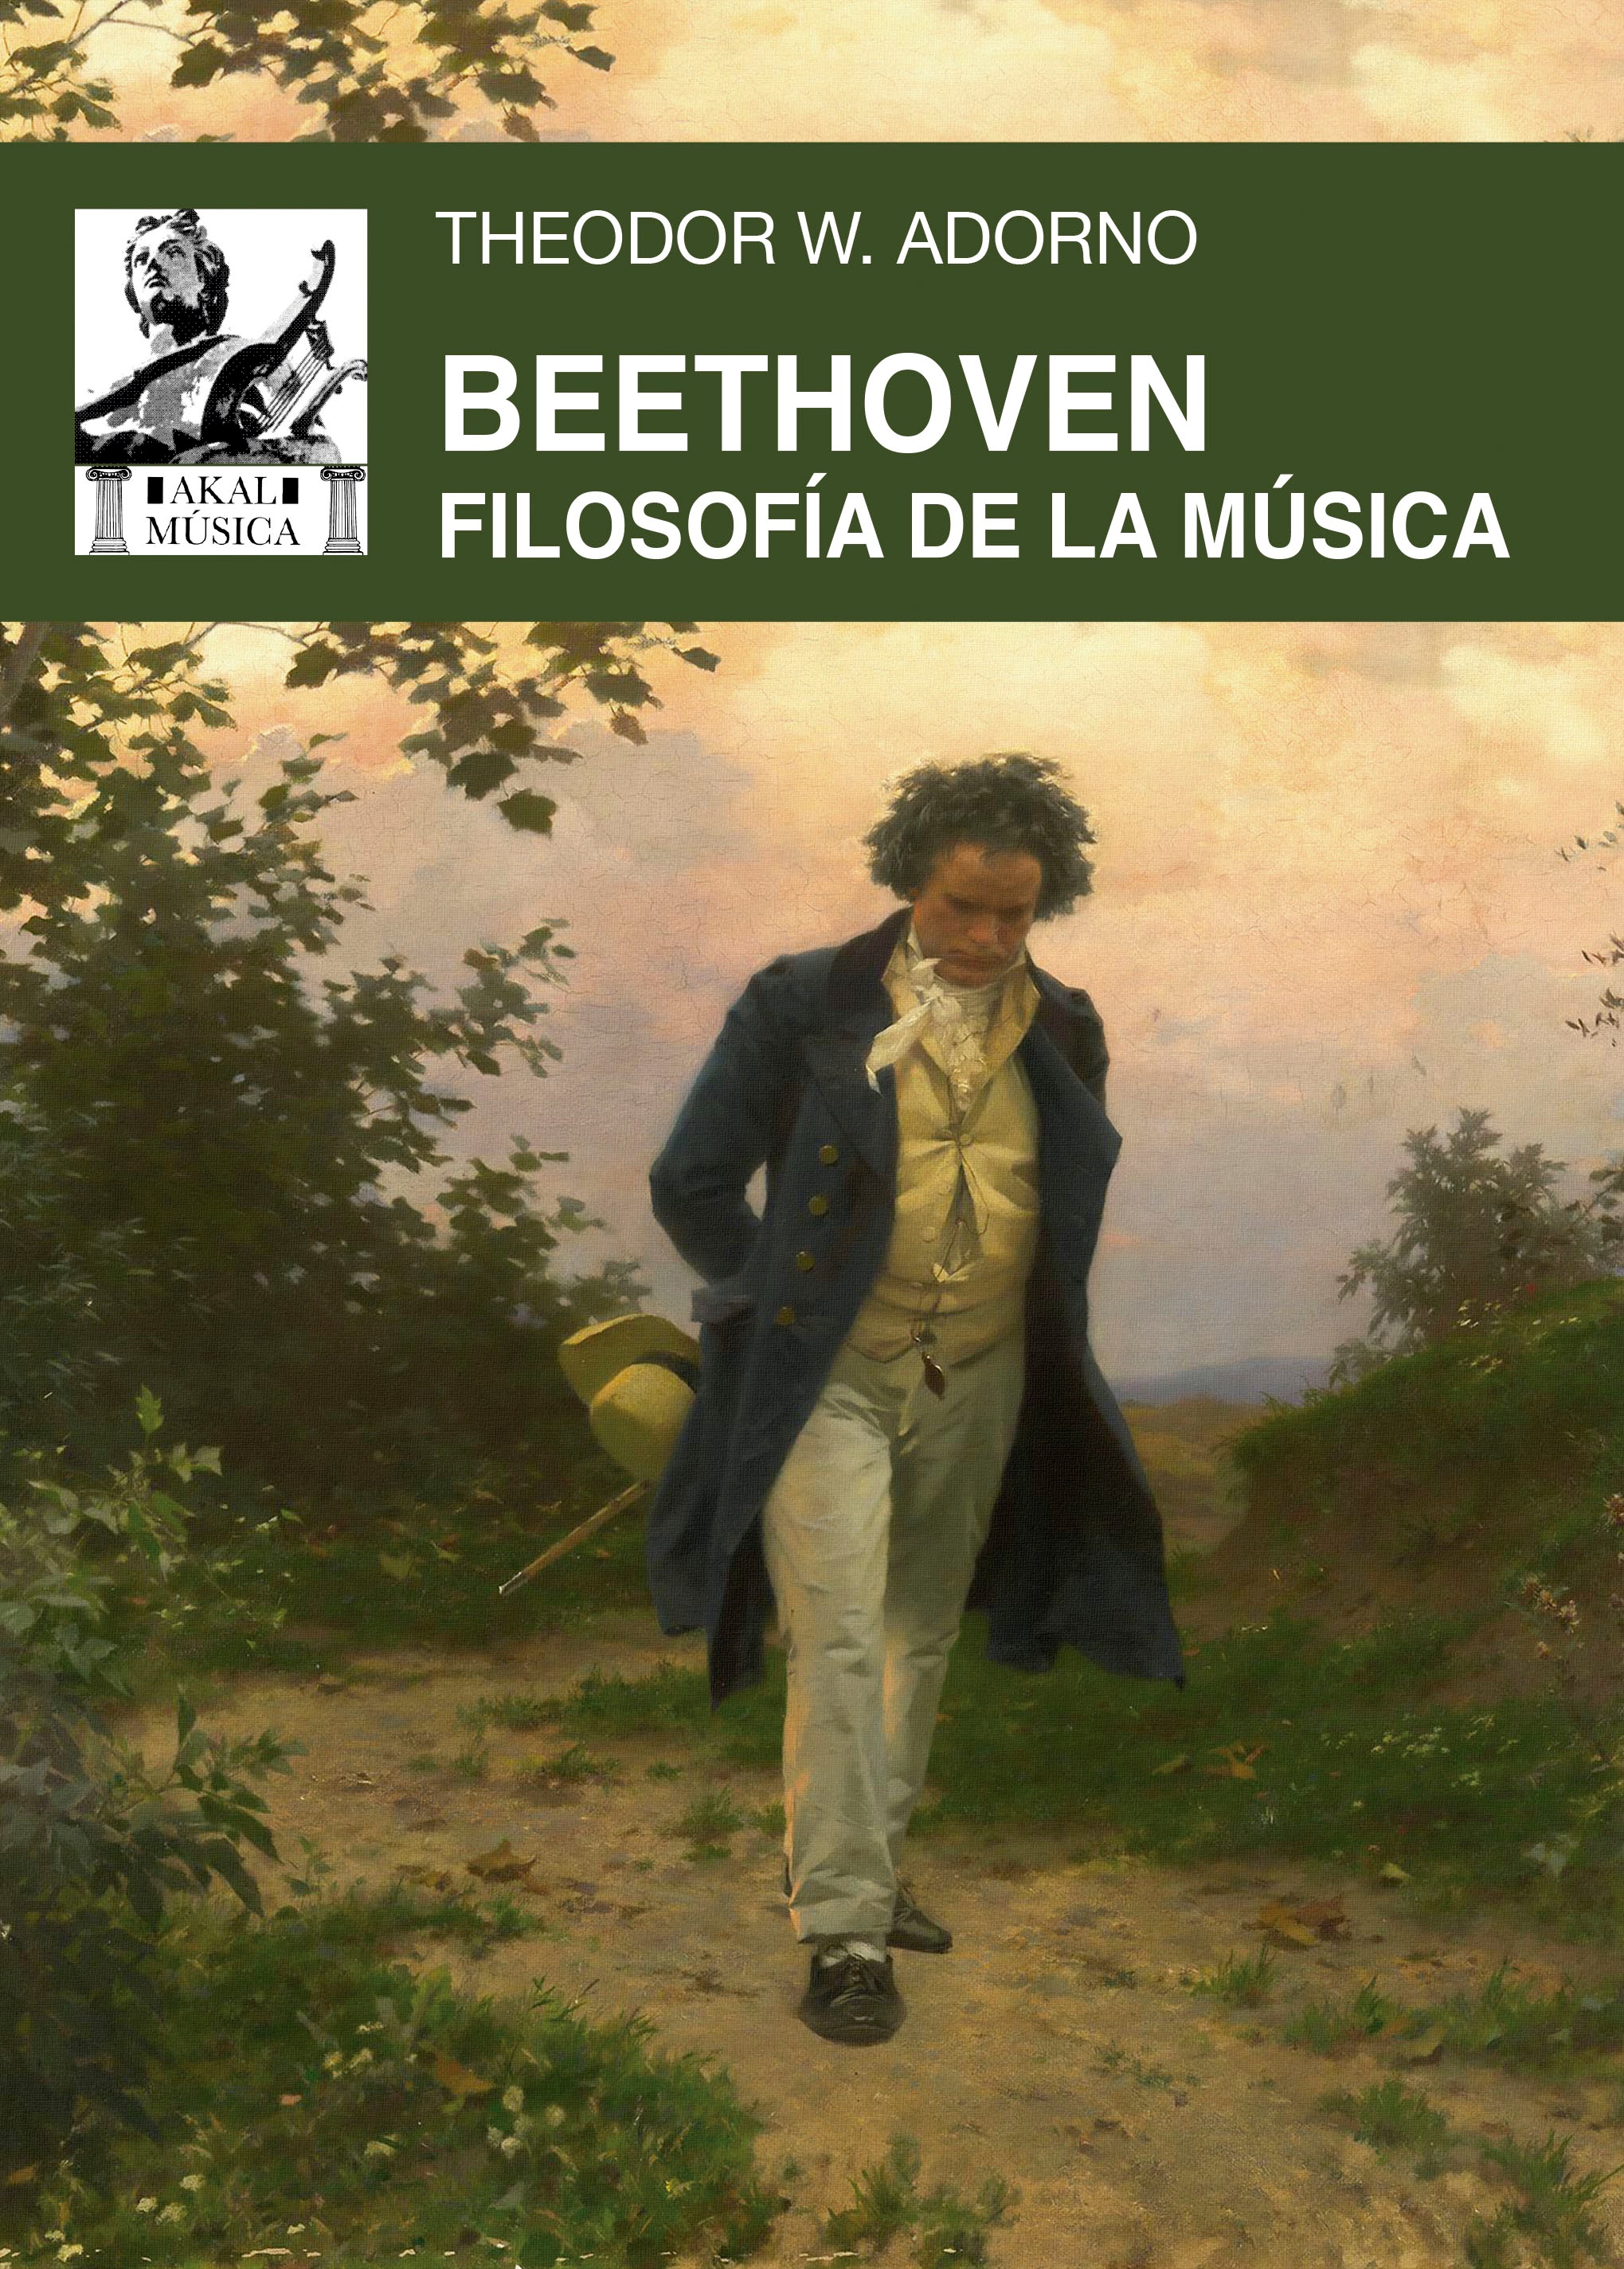 Beethoven. Filosofía de la música - Akal